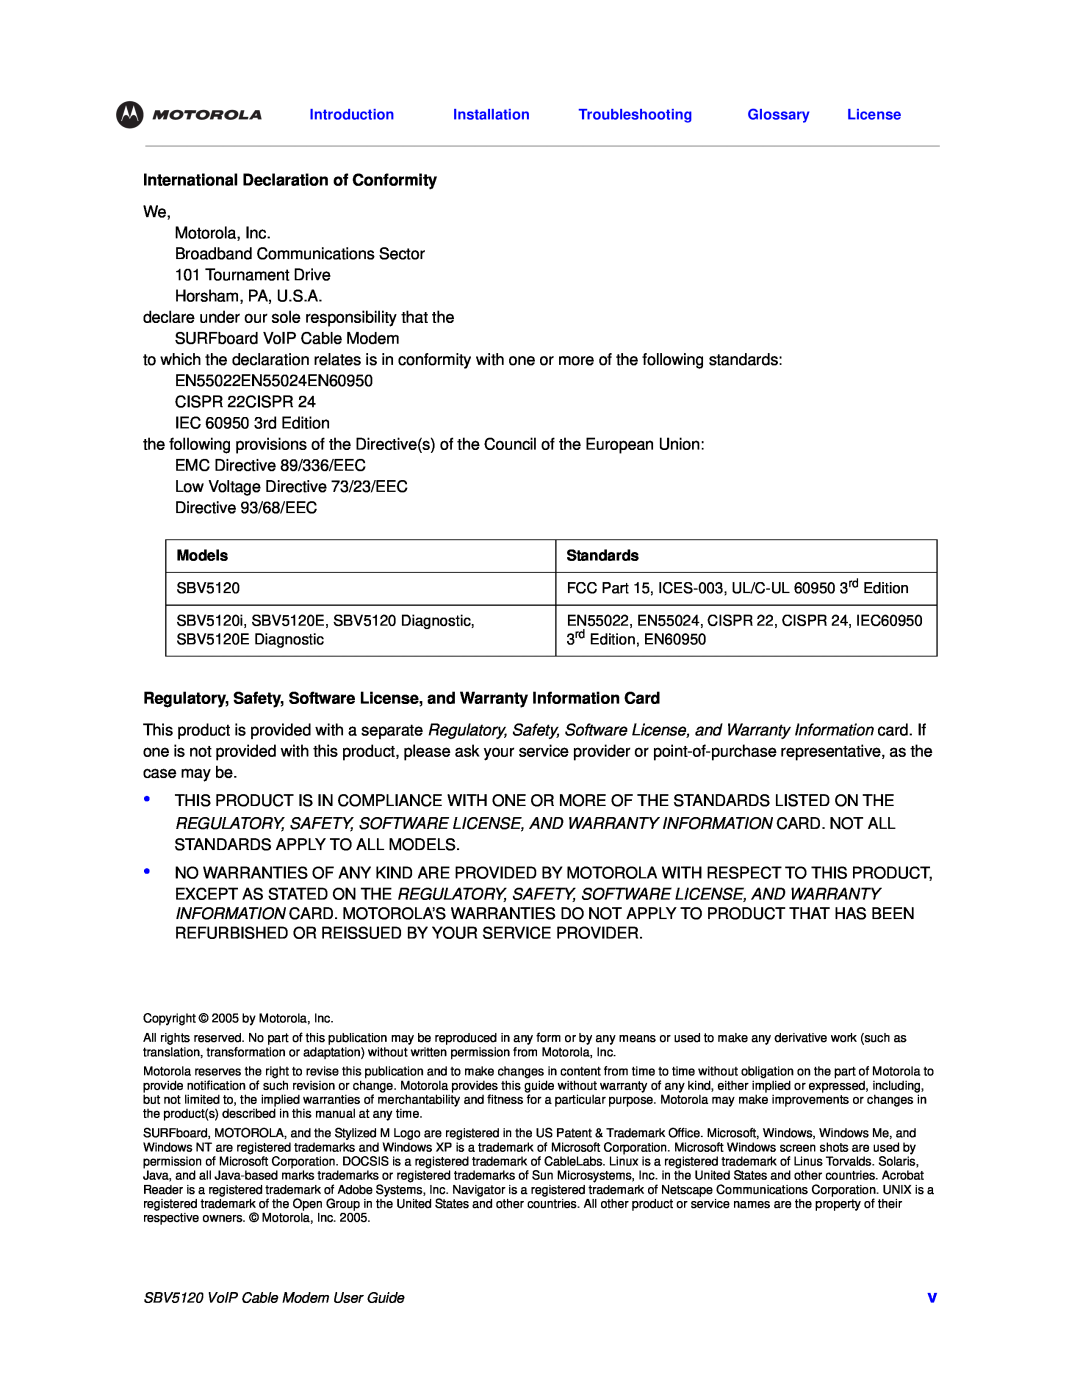 Motorola SBV5120 manual International Declaration of Conformity 